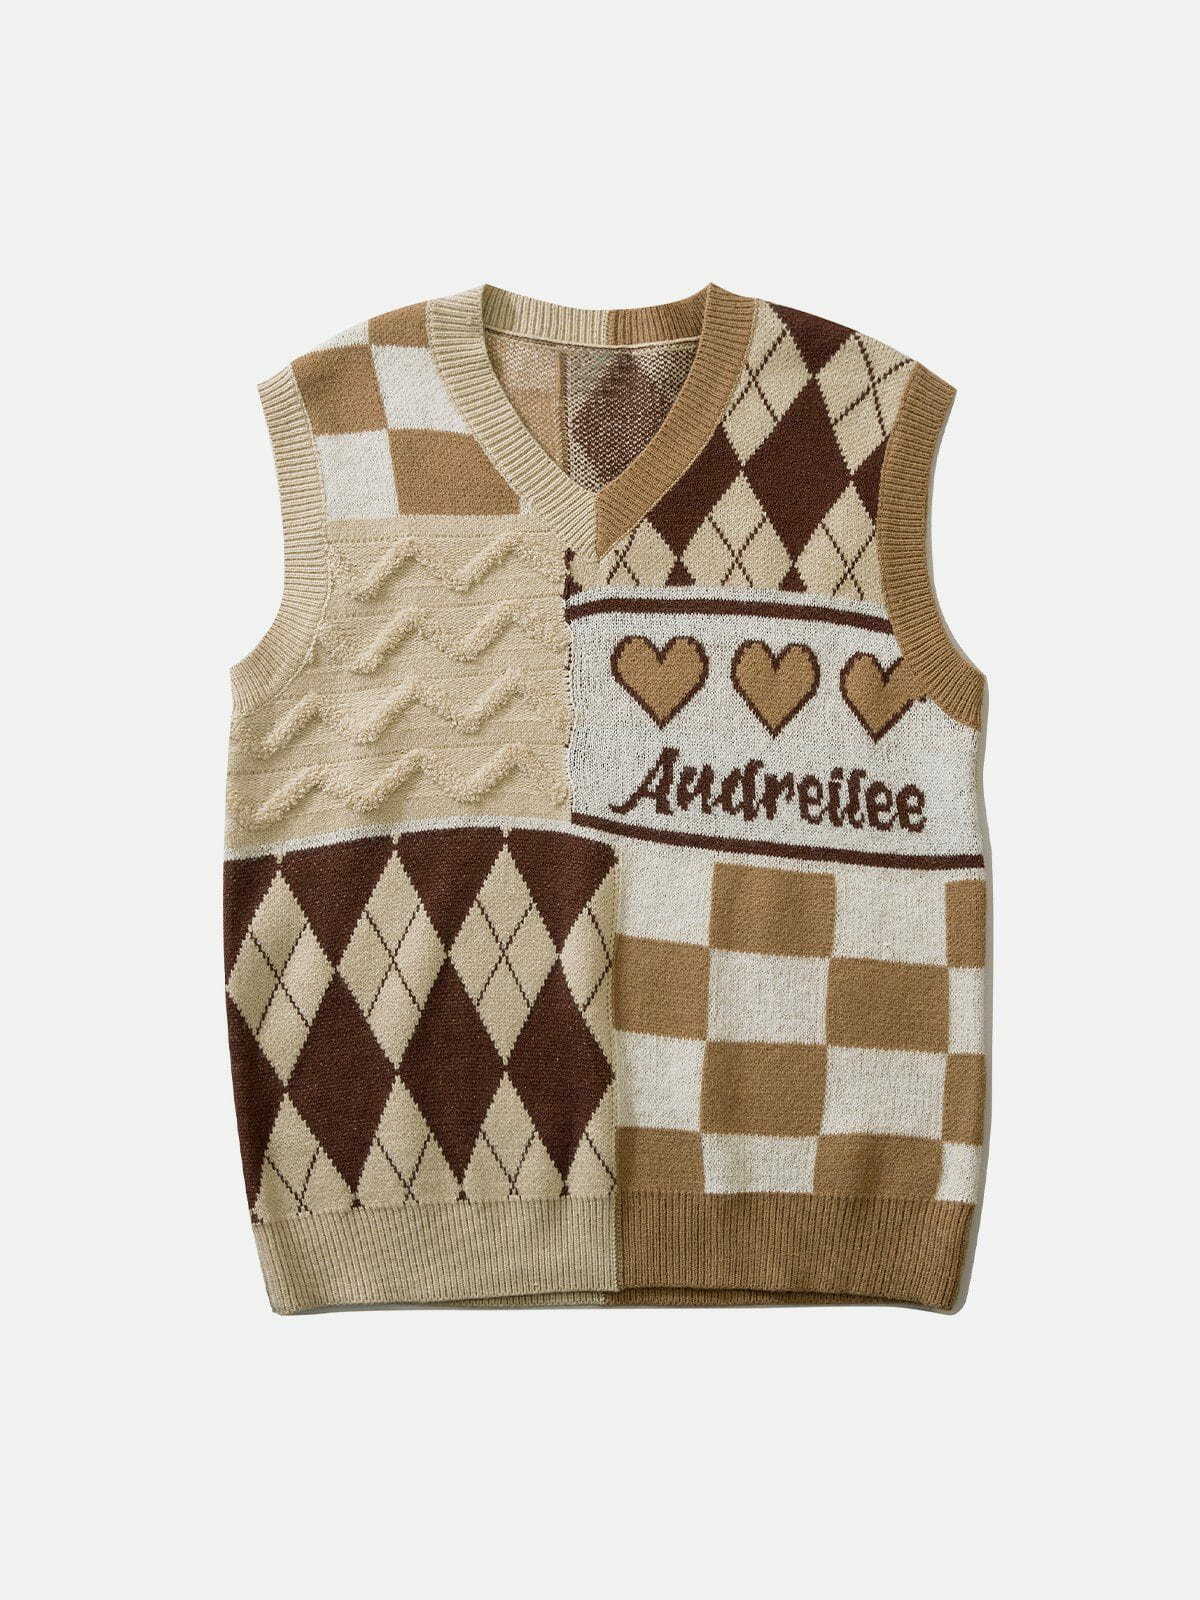 revolutionary layering sweater vest edgy  retro streetwear essential 8560